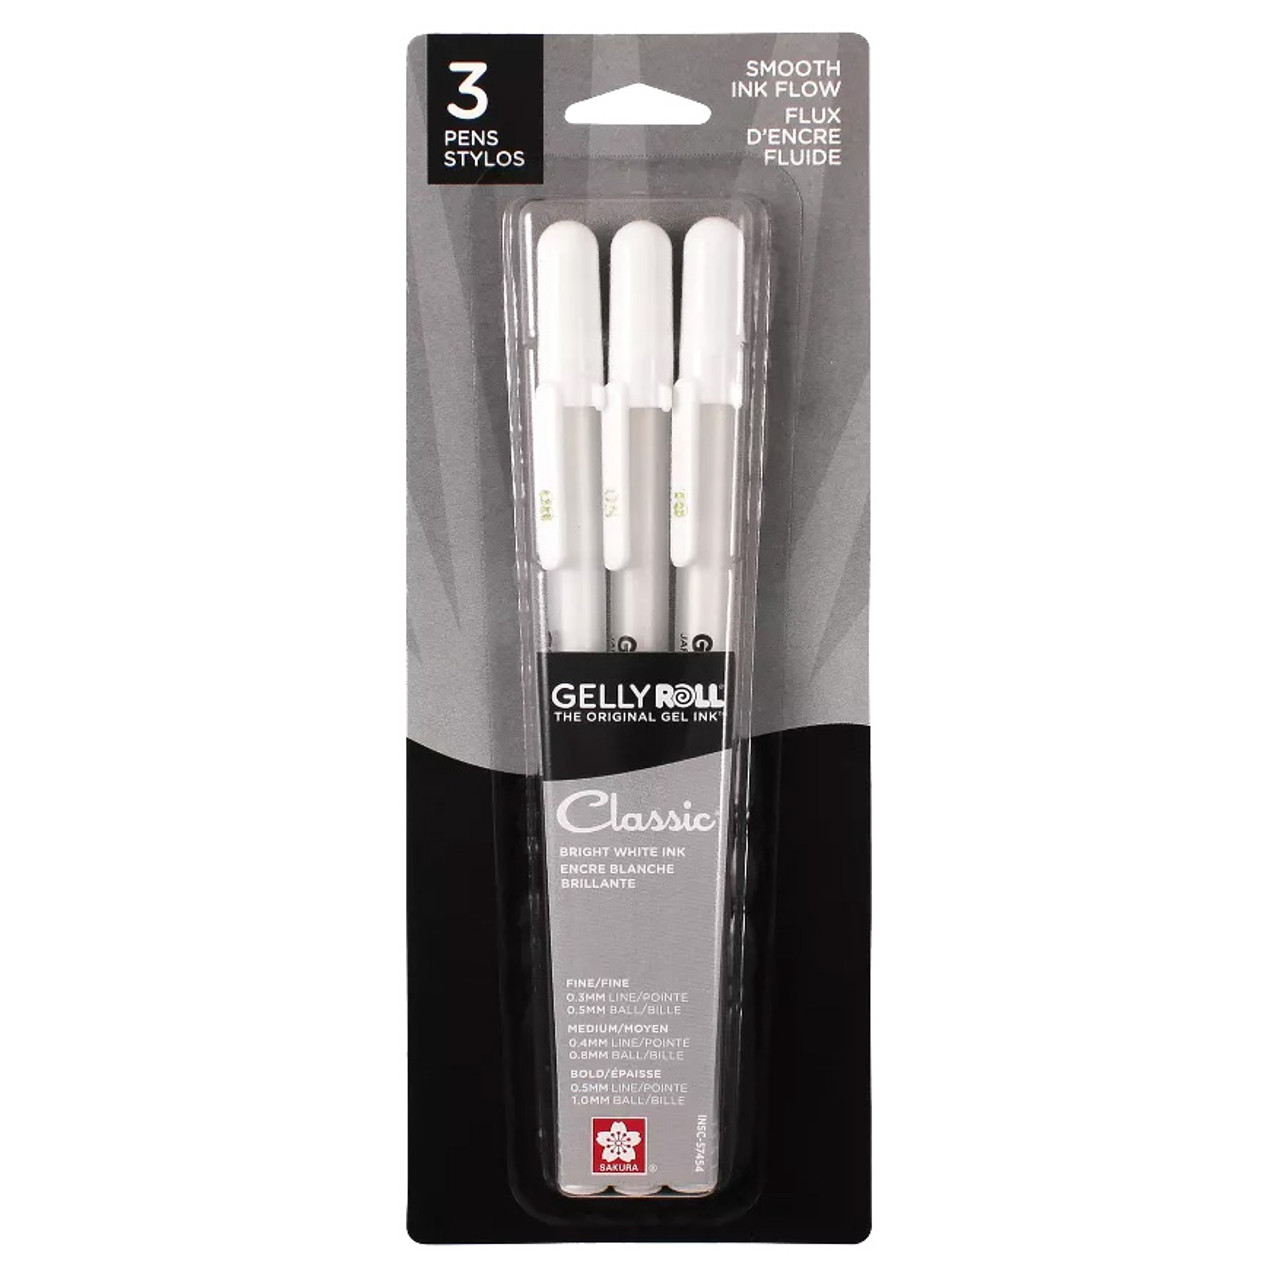 Gelly Roll Pen Bright White 3pk Fine, Medium, Bold tips